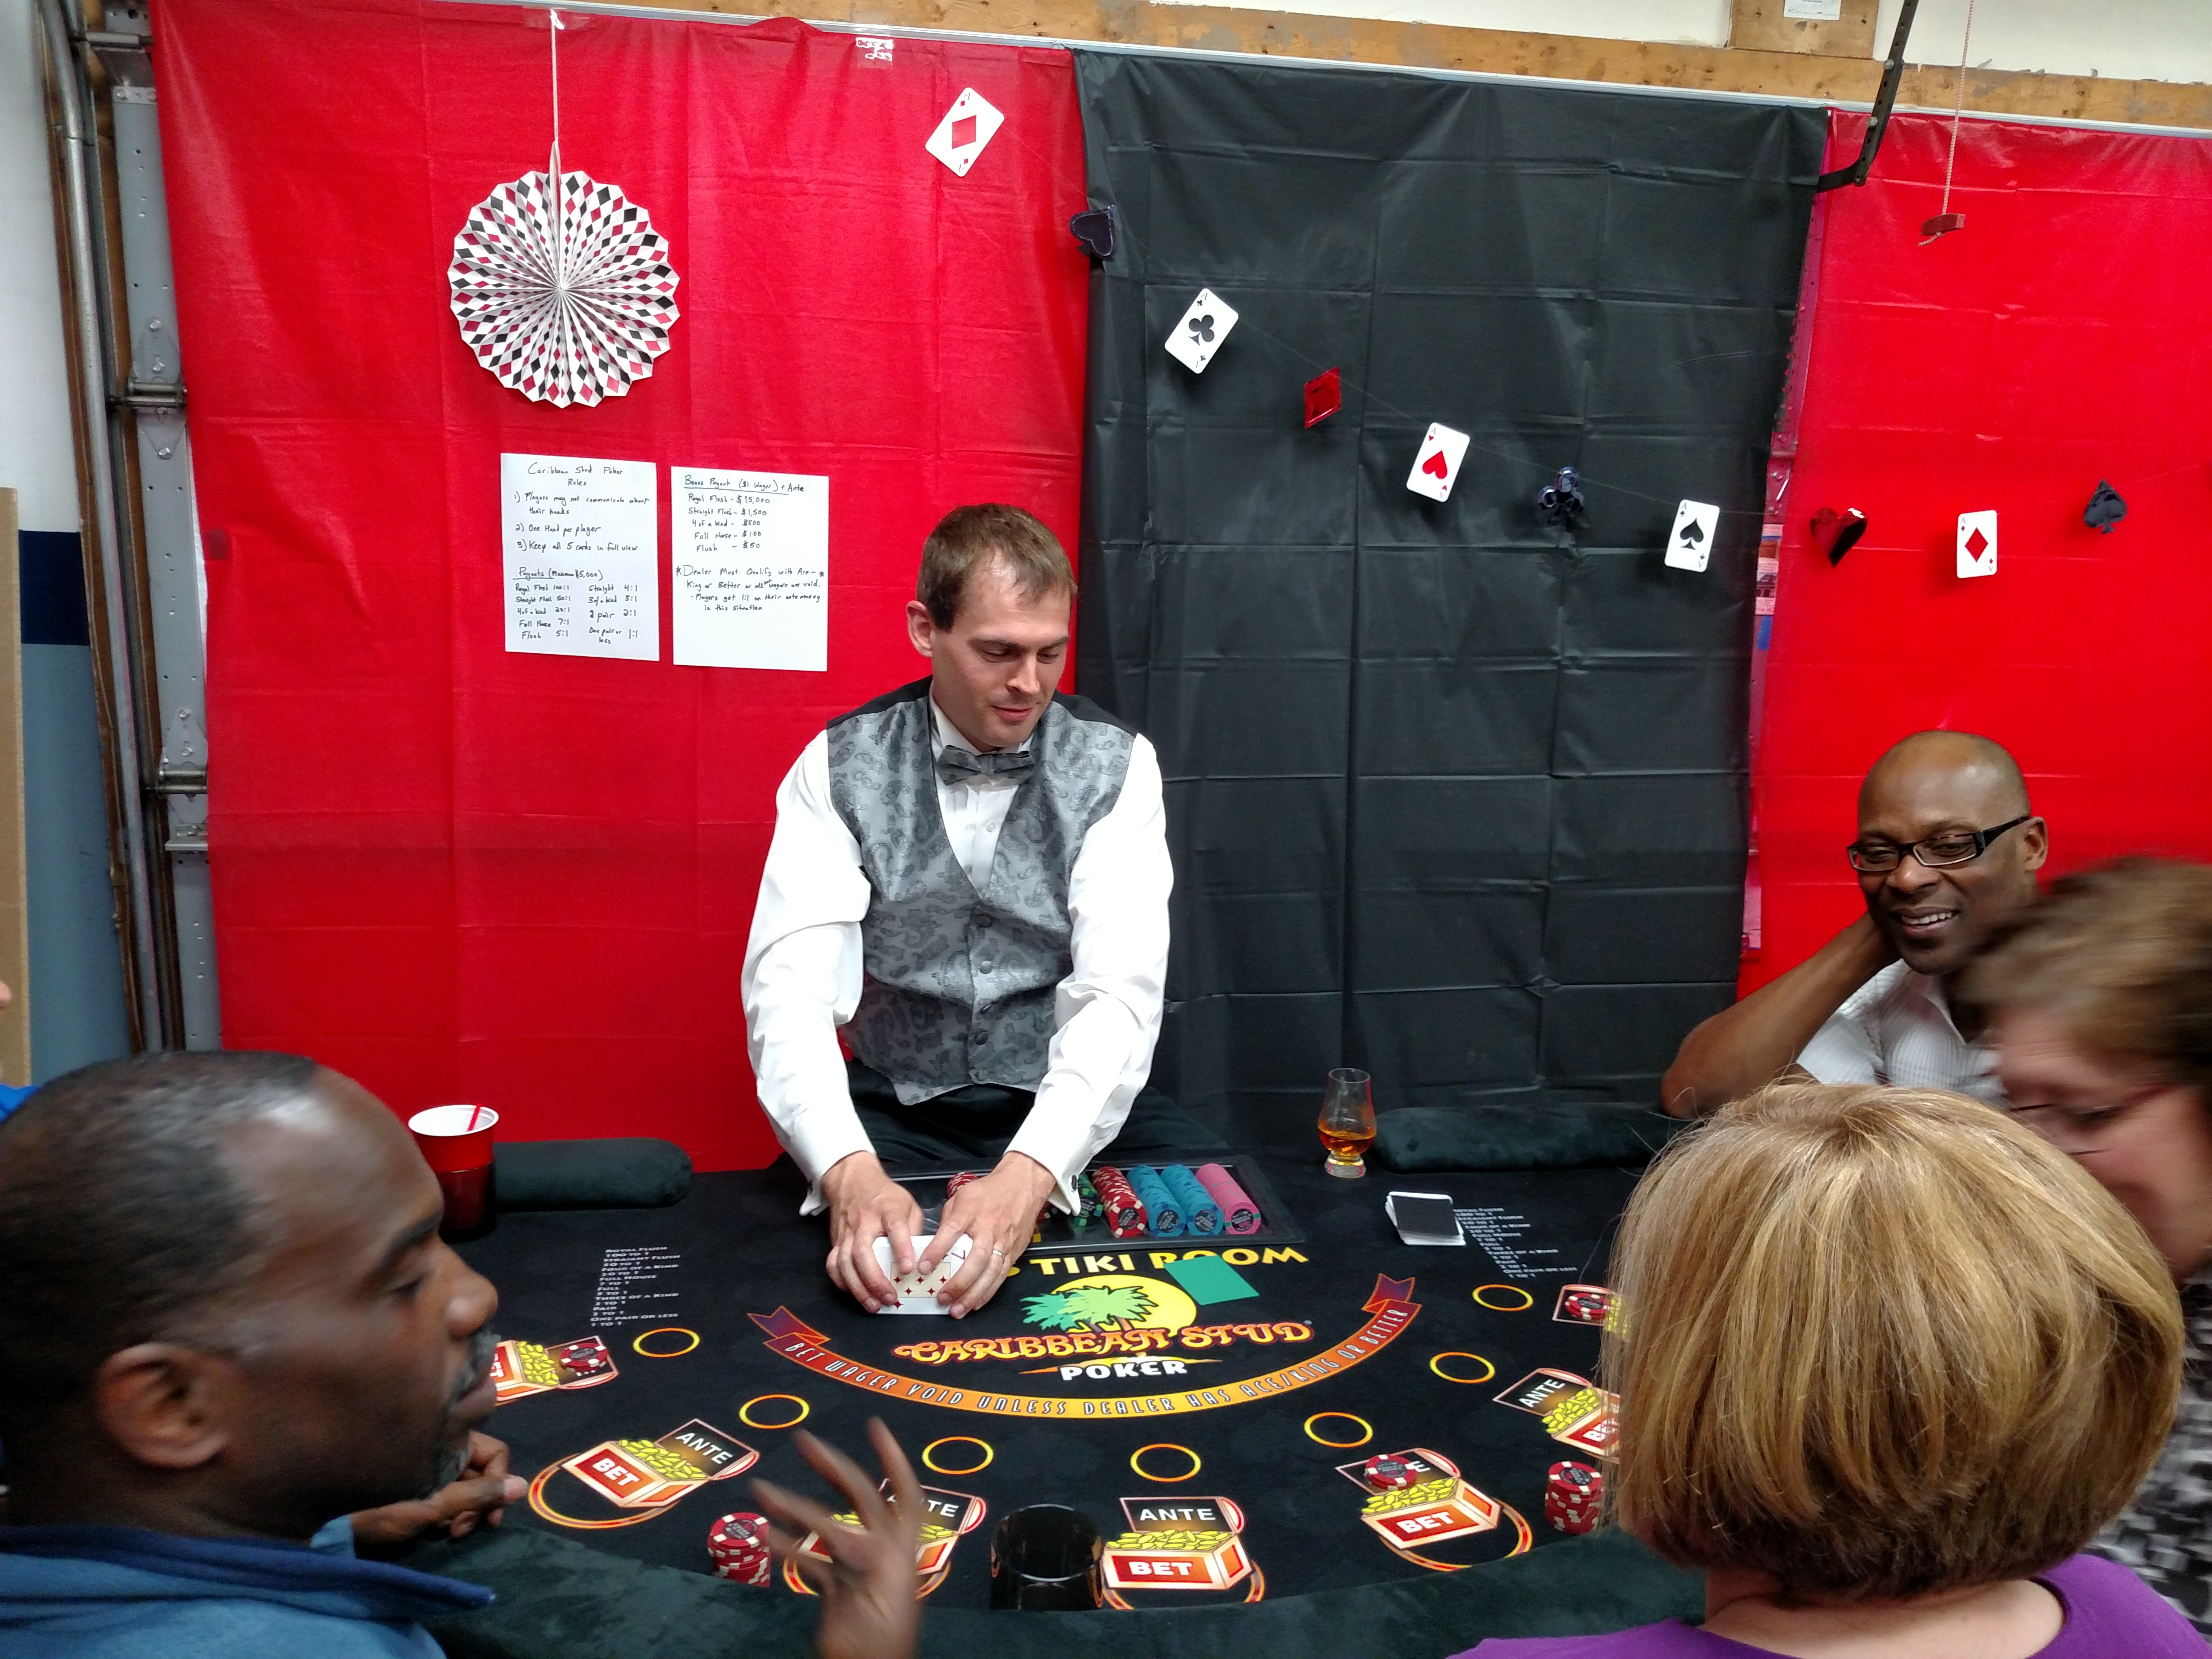 покер казино форум